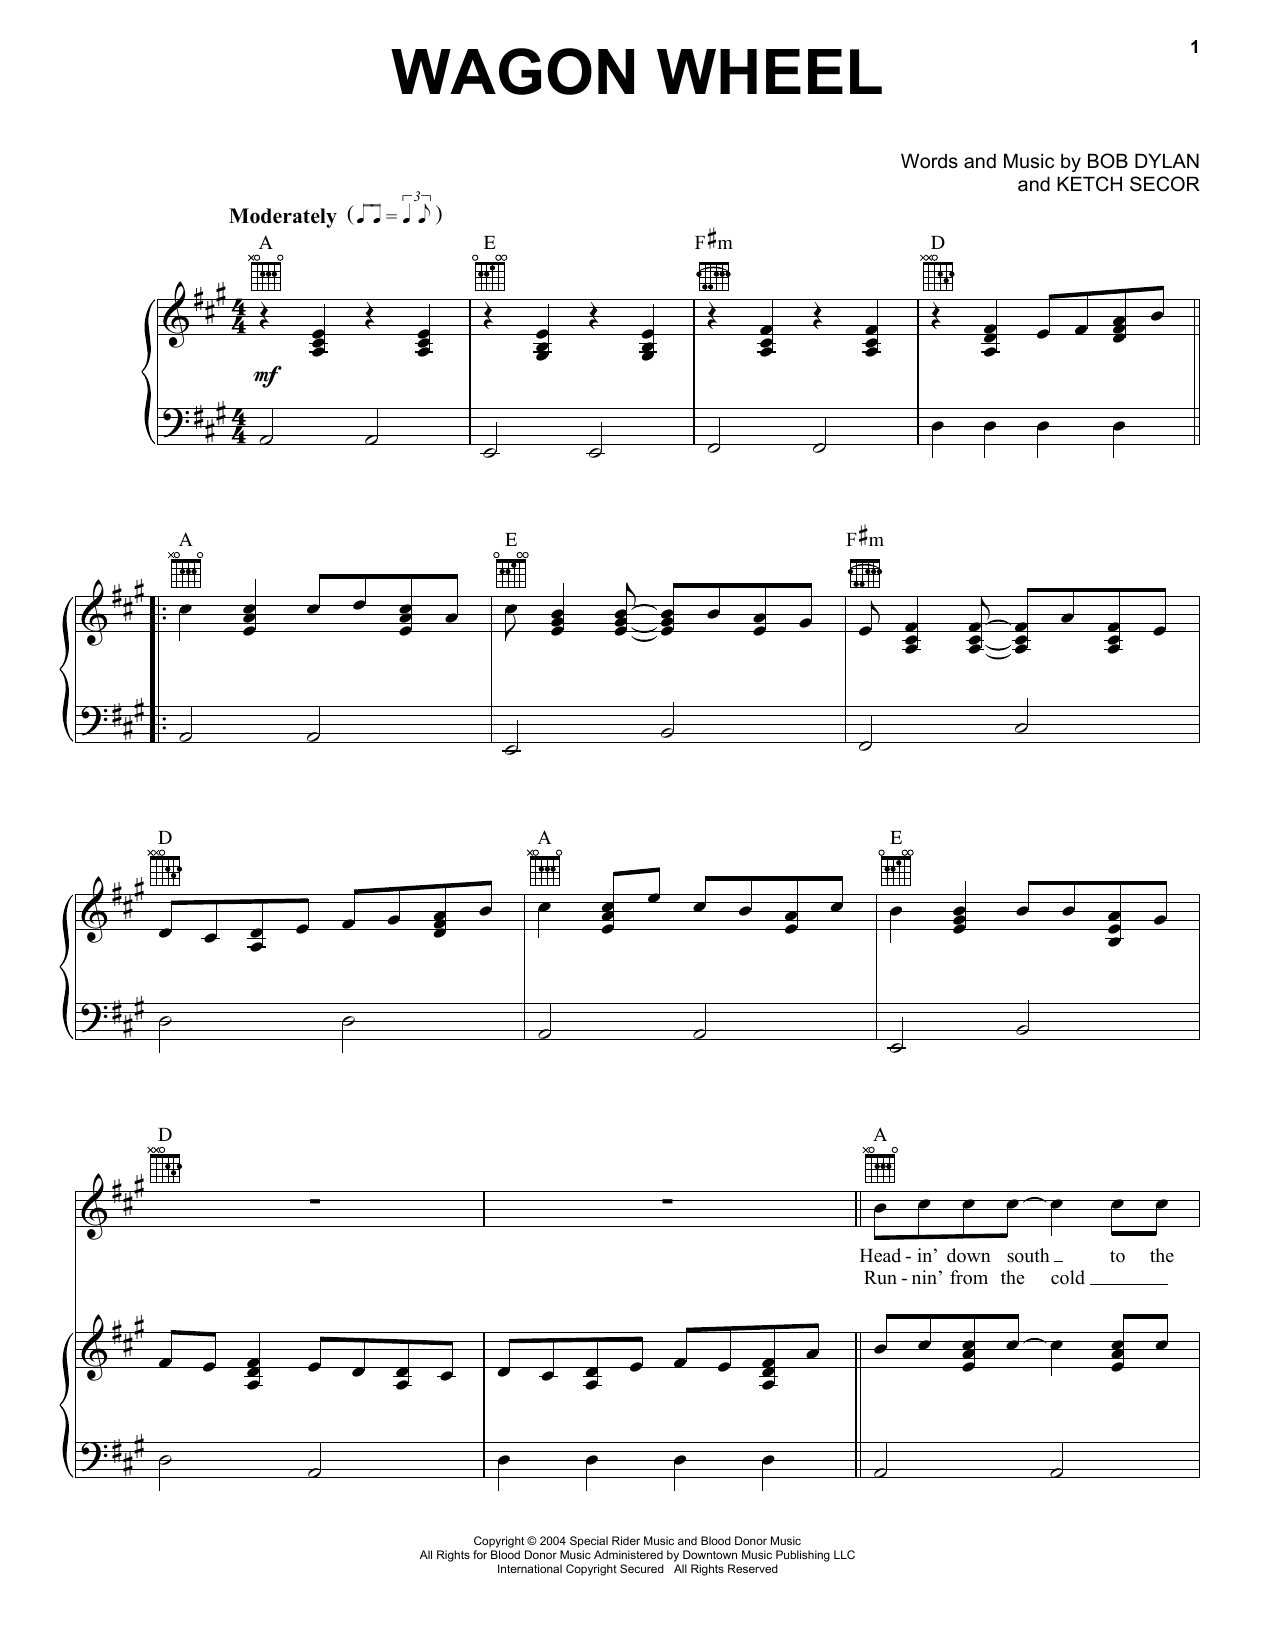 Darius Rucker Wagon Wheel Sheet Music Notes & Chords for Guitar Tab - Download or Print PDF